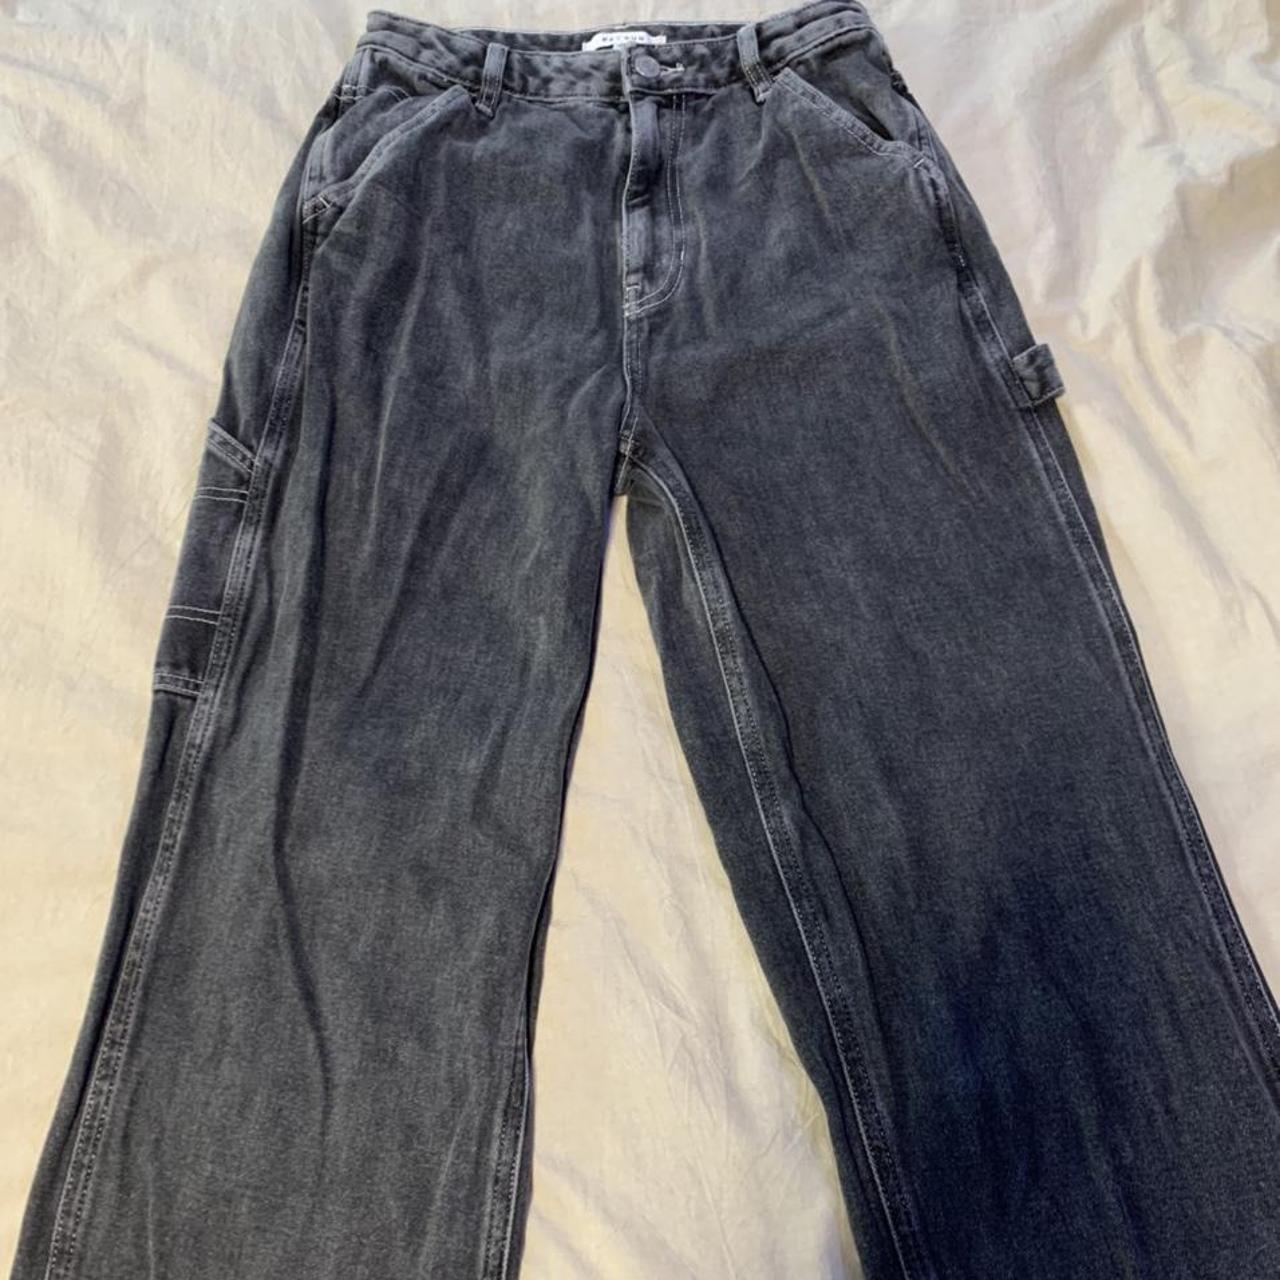 Faded black/dark grey cargo pants Waist size: 27” - Depop